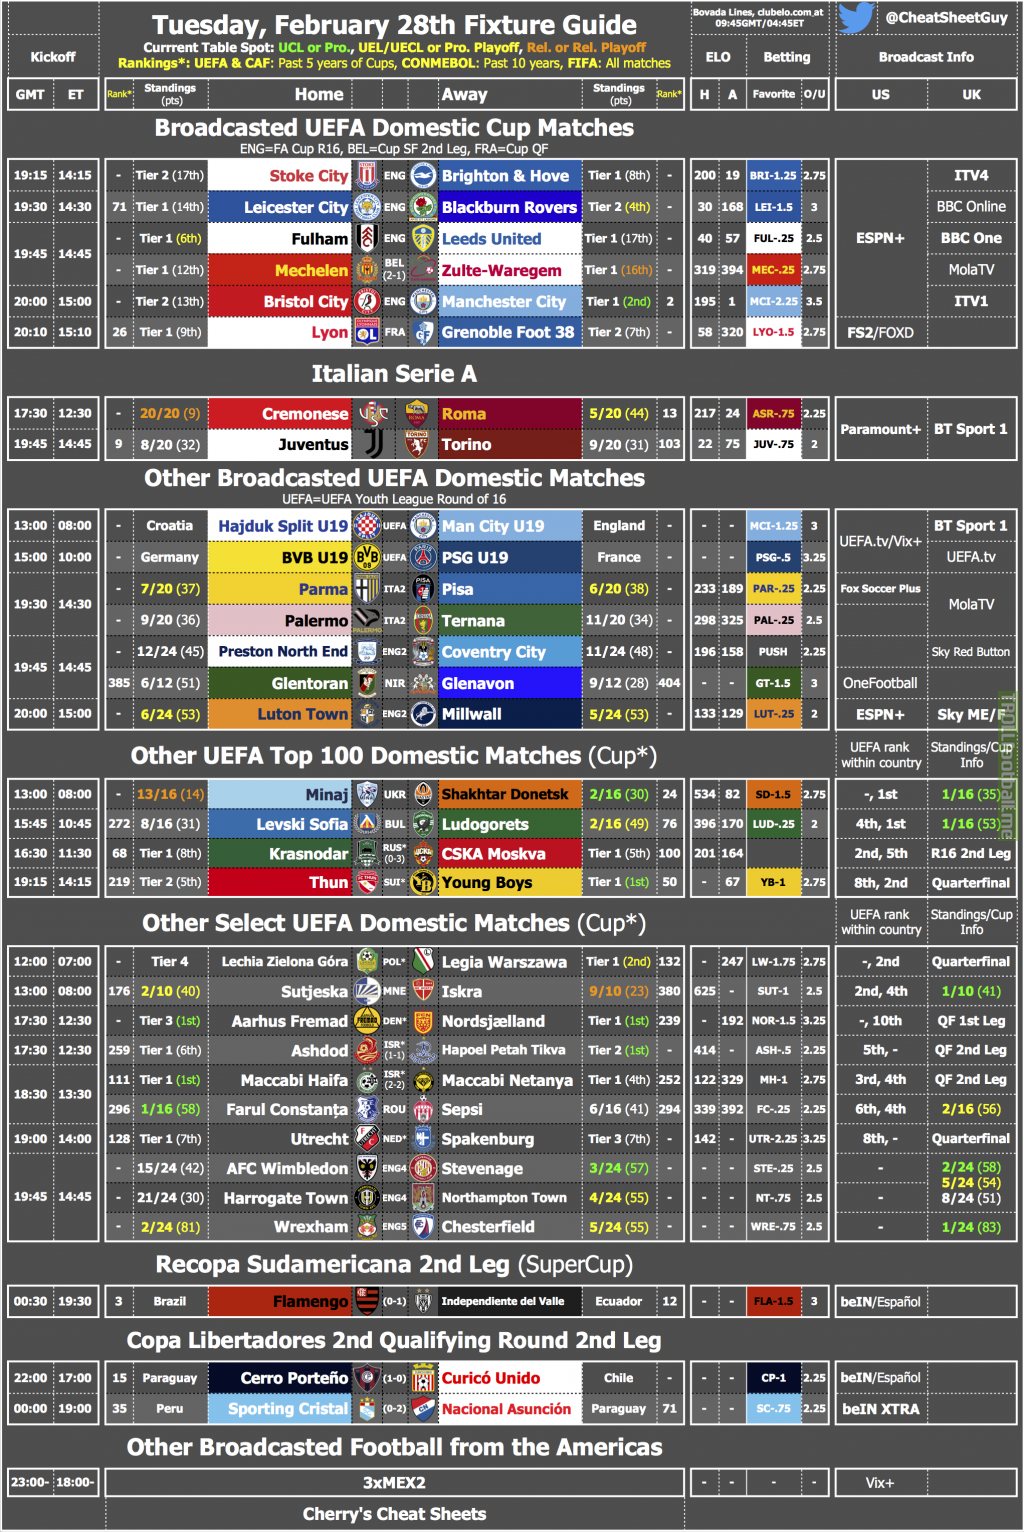 Tuesday's Fixture & Broadcast Cheat Sheet [OC]